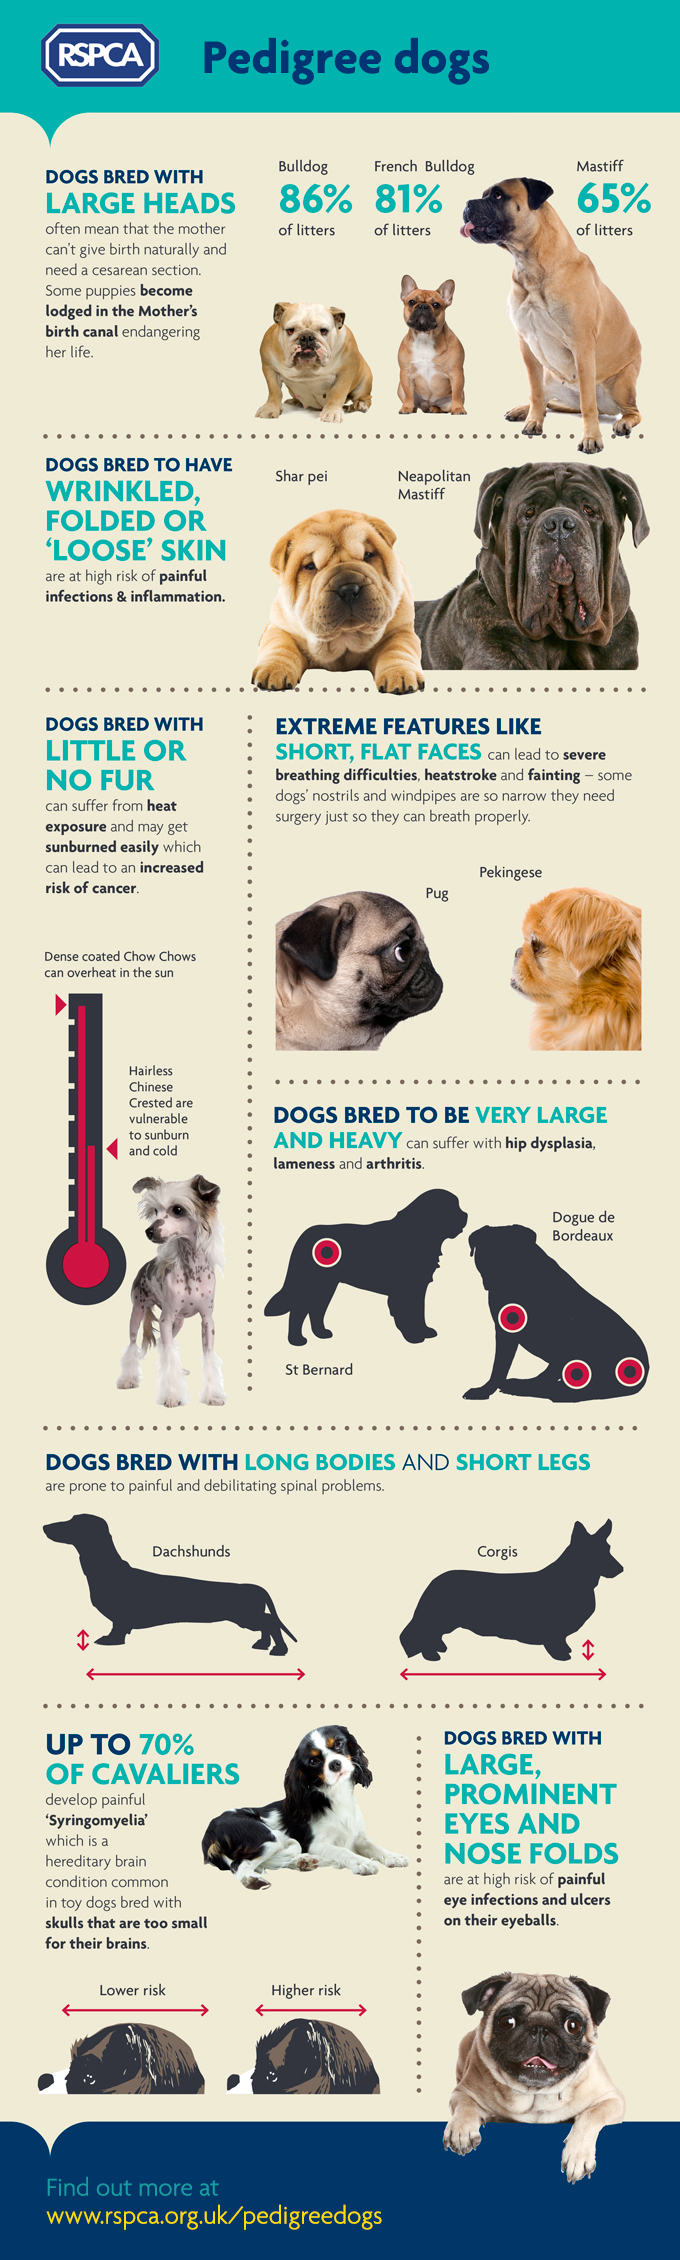 Pedigree dogs health problems © RSPCA